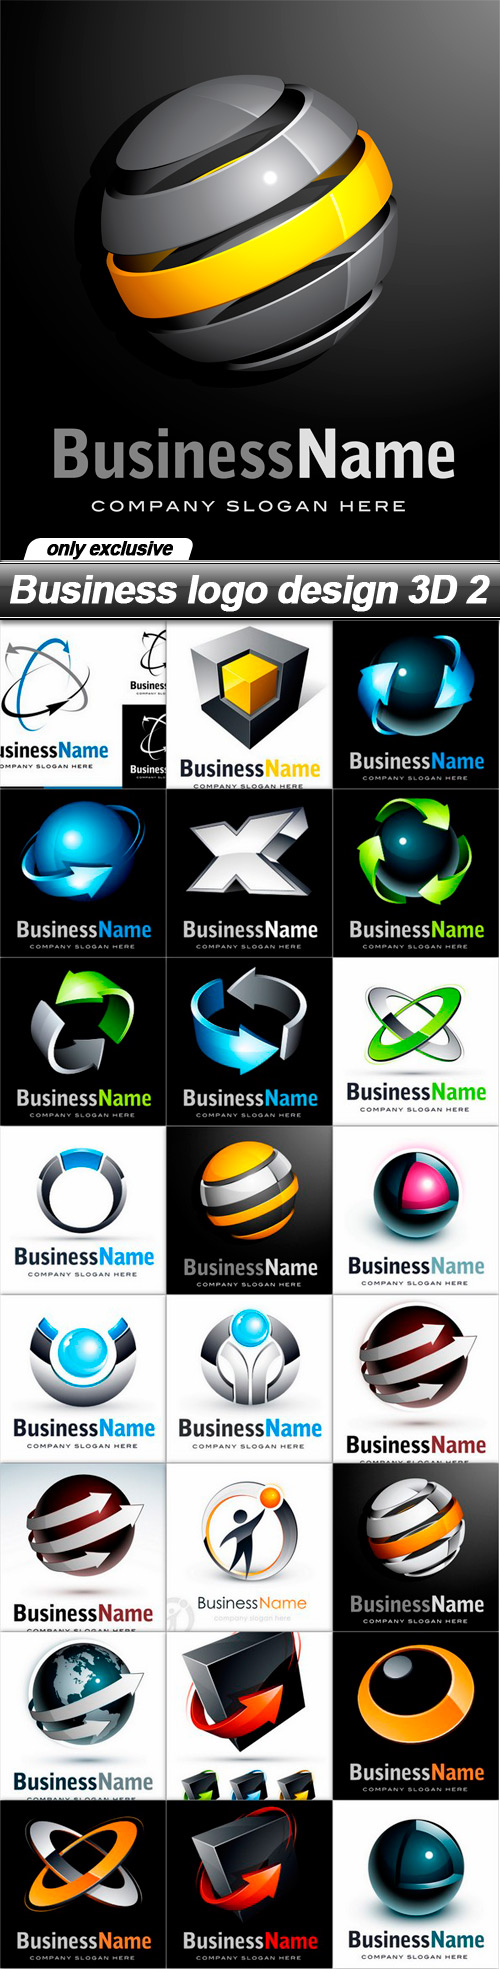 Business logo design 3D 2 - 25 EPS